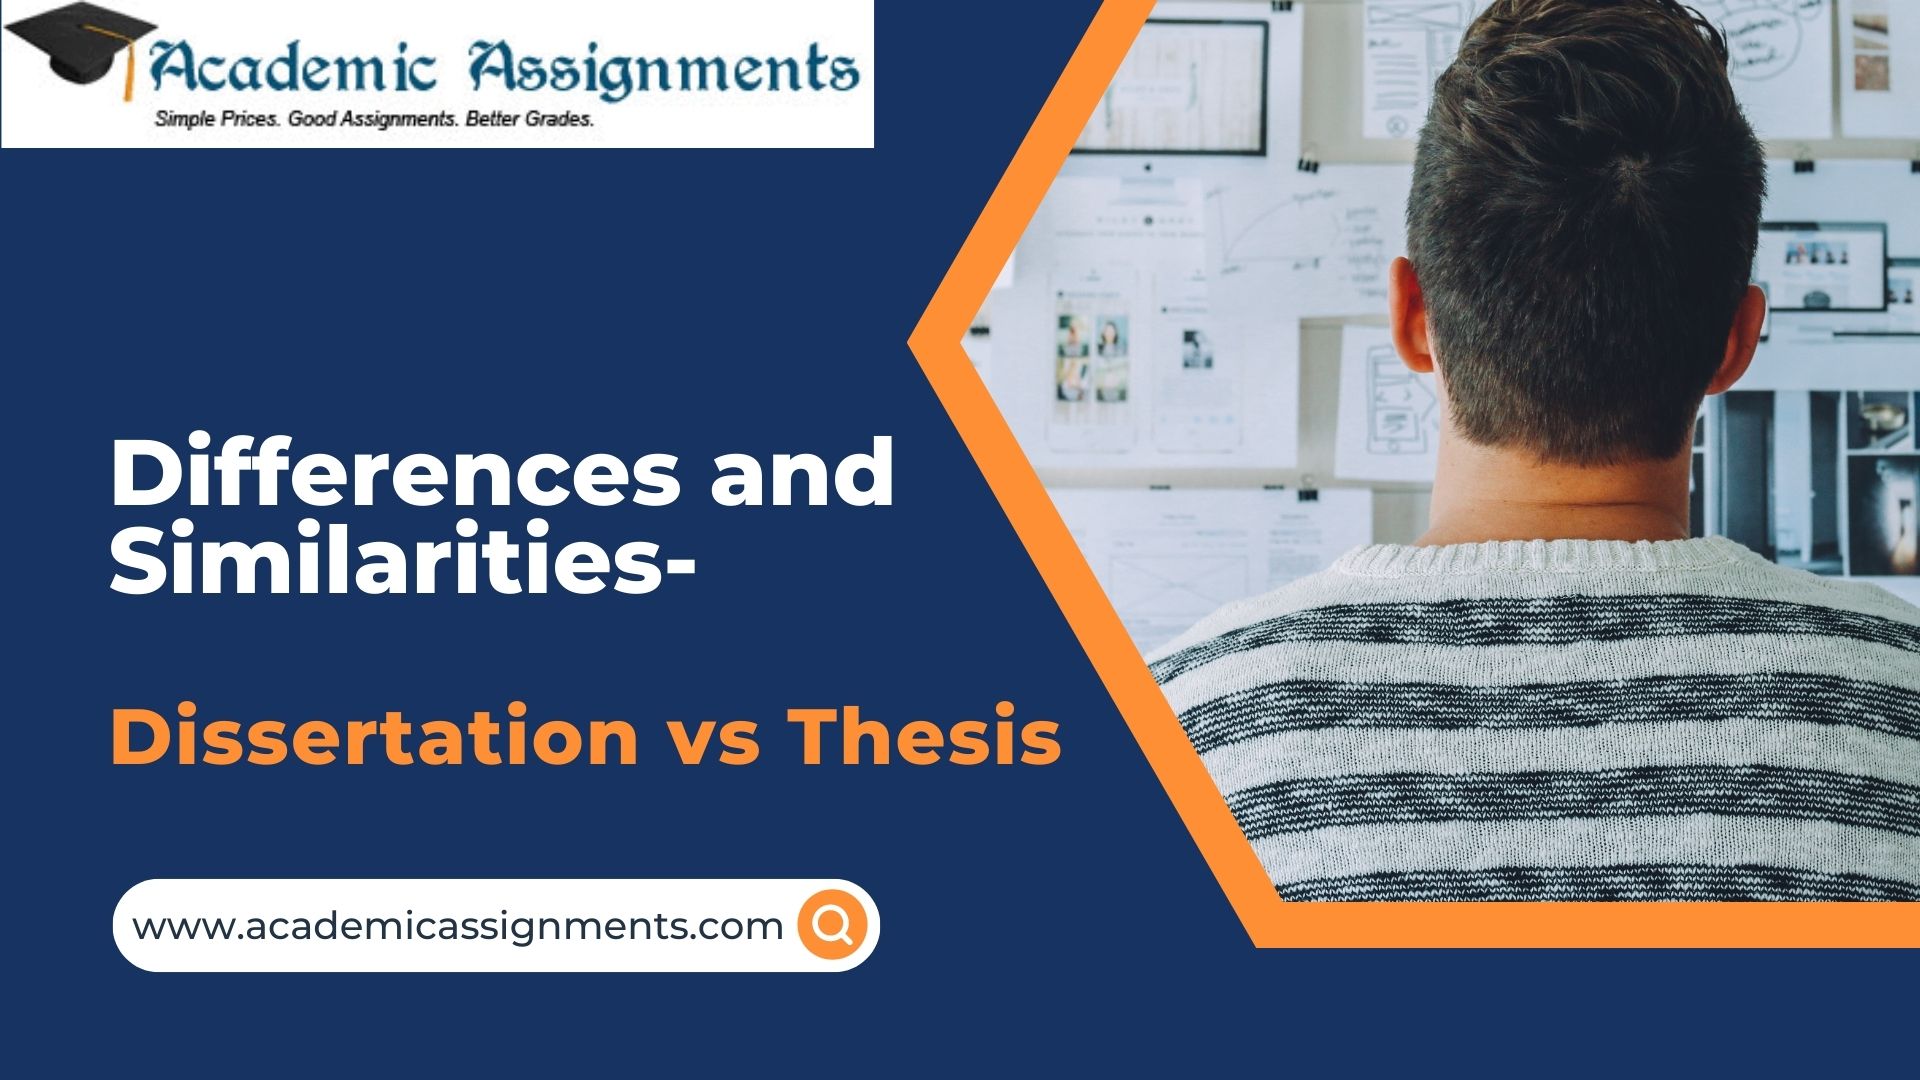 Dissertation vs Thesis